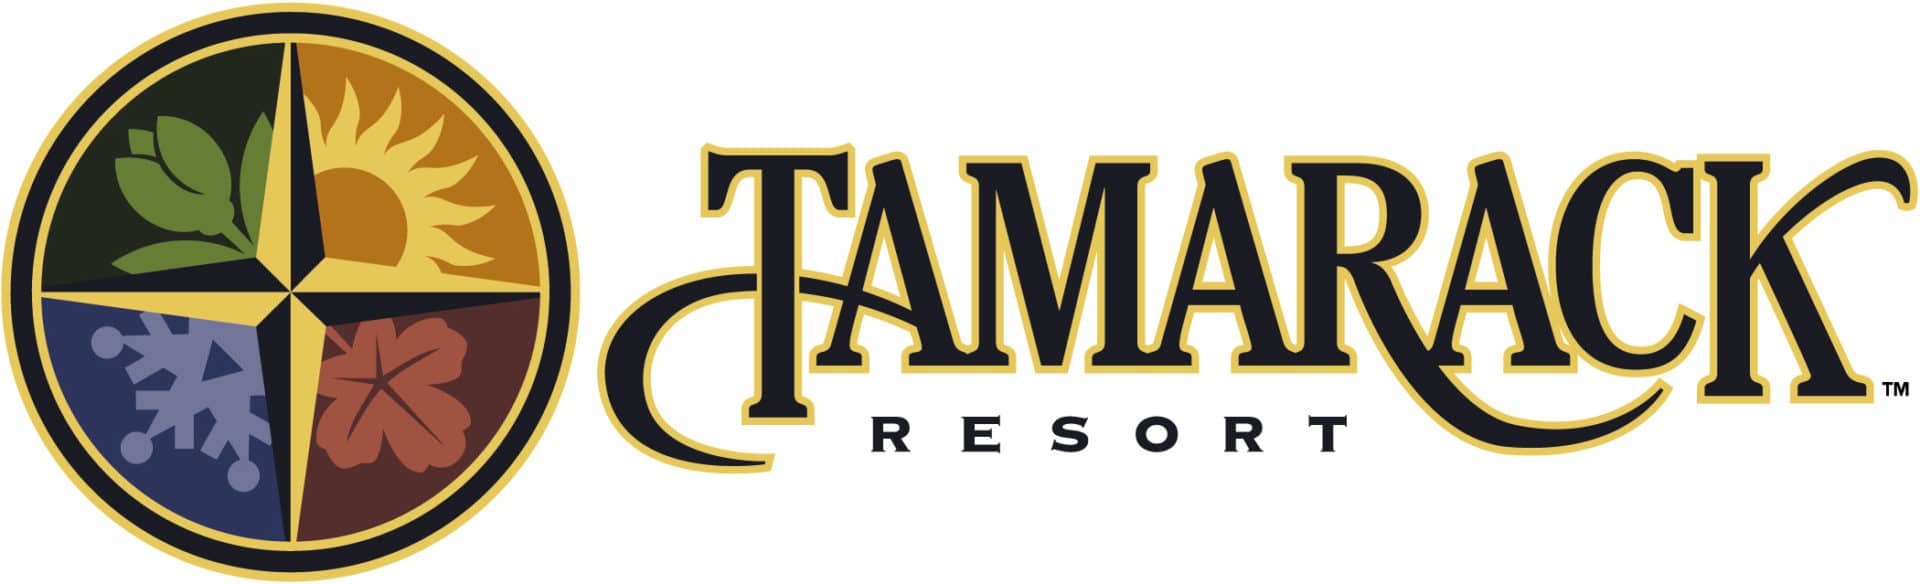 Tamarack Resort Idaho Logo_ MMG Equity Partners